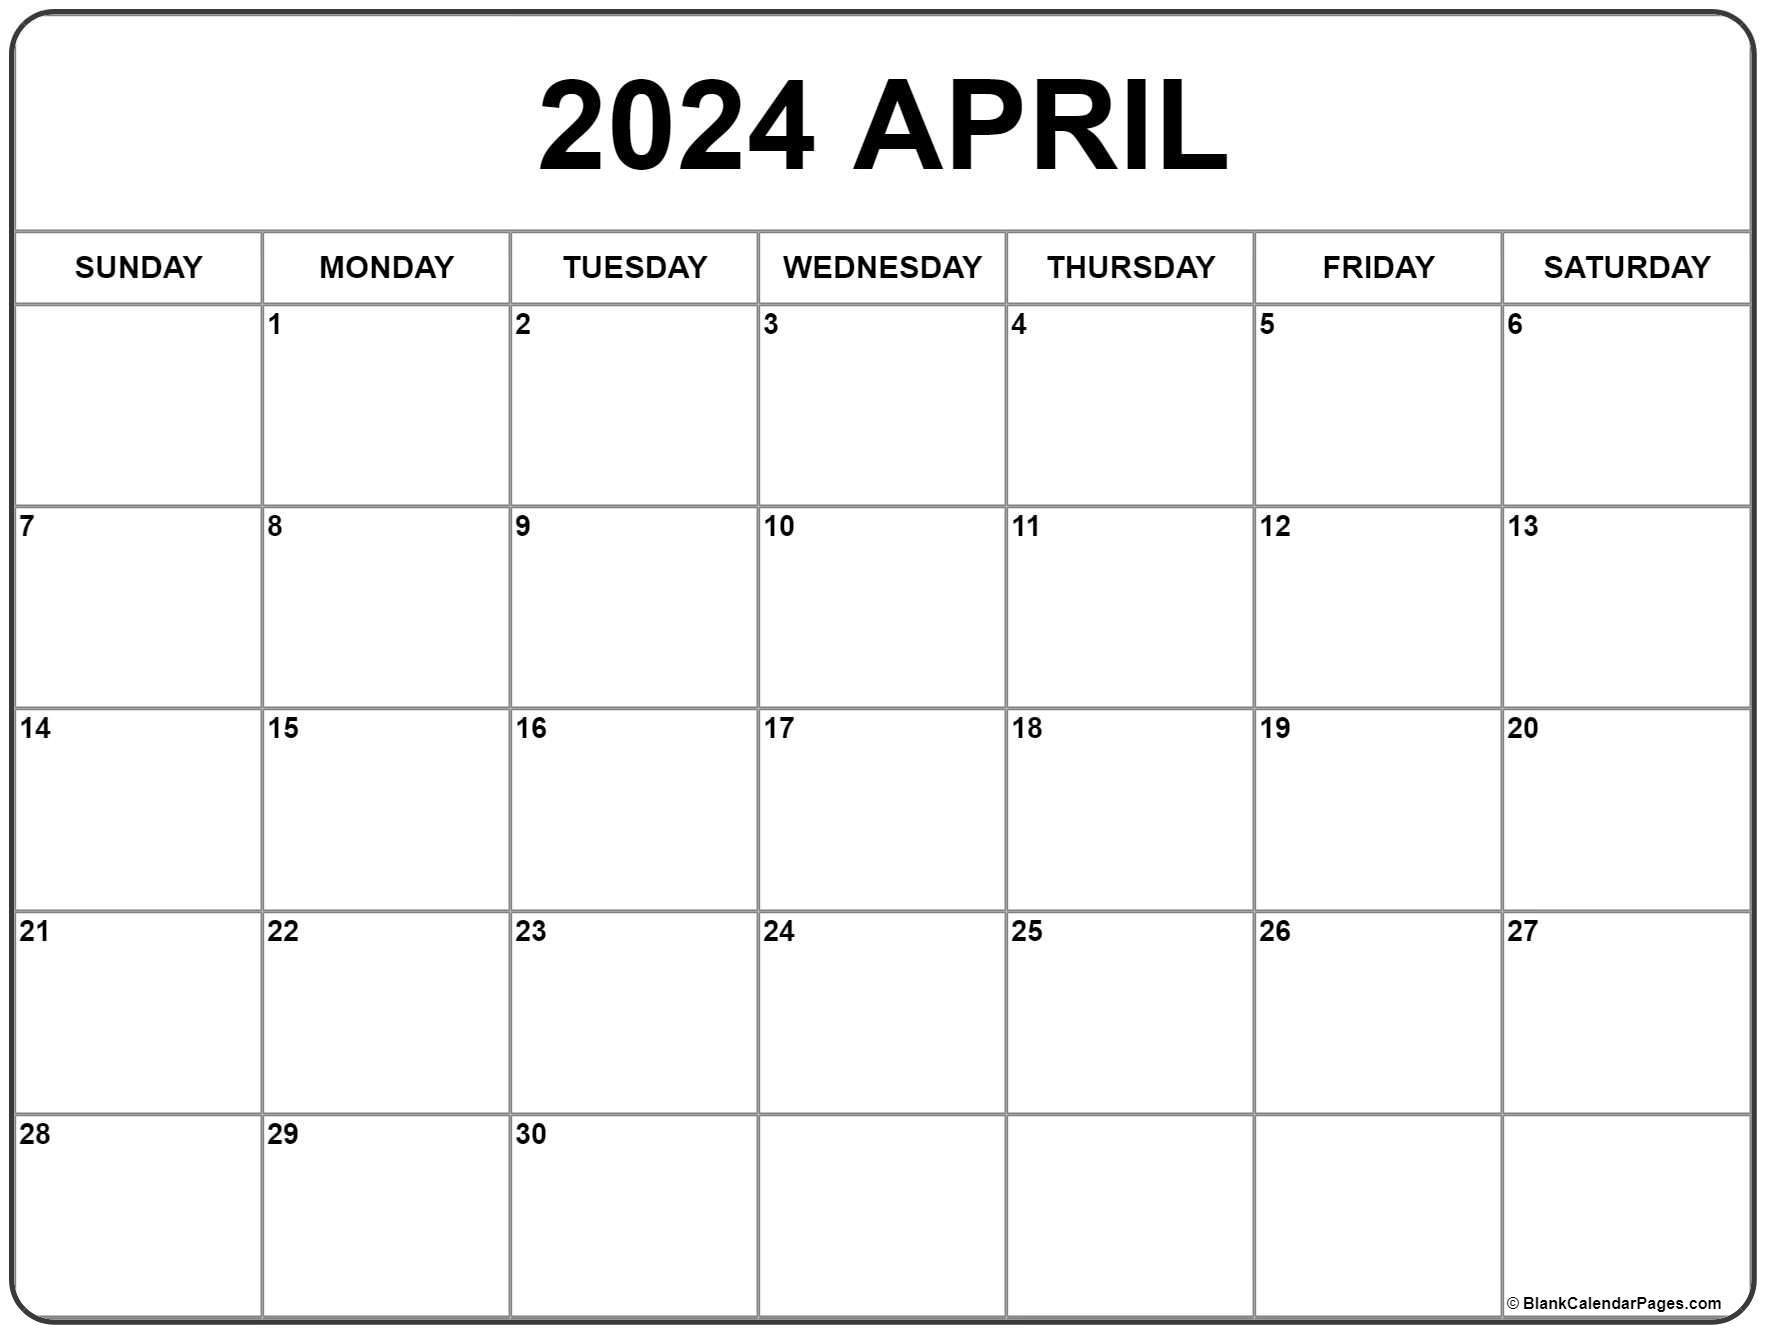 April 2024 Calendar | Free Printable Calendar | Free Printable Calendar 2024 April